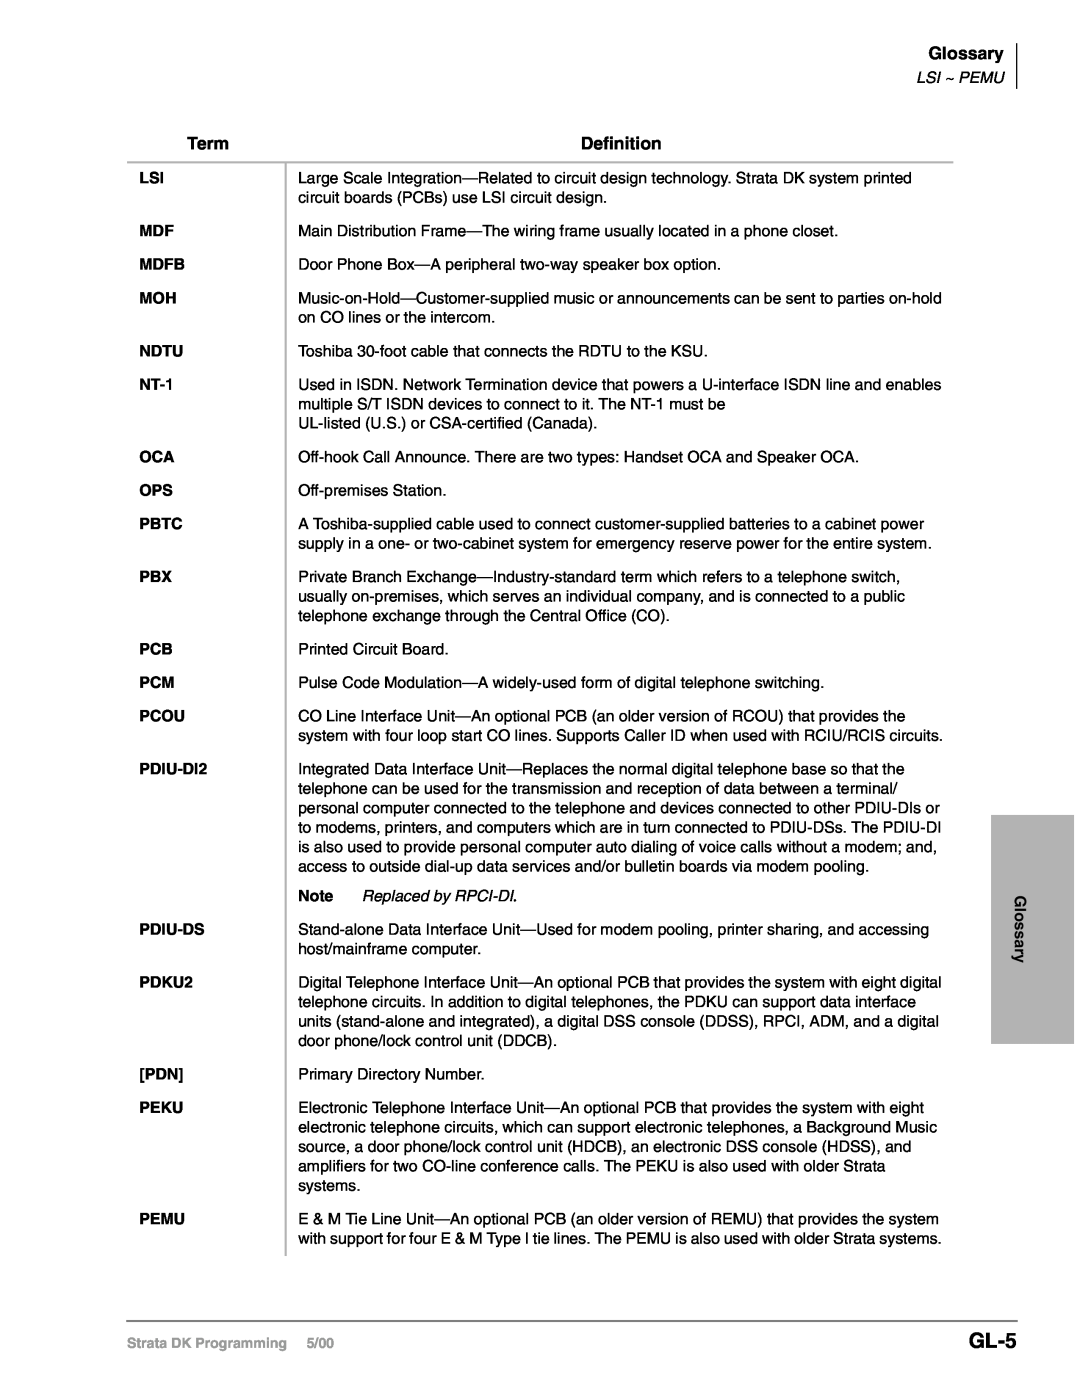 Toshiba DK424I, dk14, DK40I manual GL-5, Glossary, Term, Definition, Lsi ~ Pemu, Note Replaced by RPCI-DI 